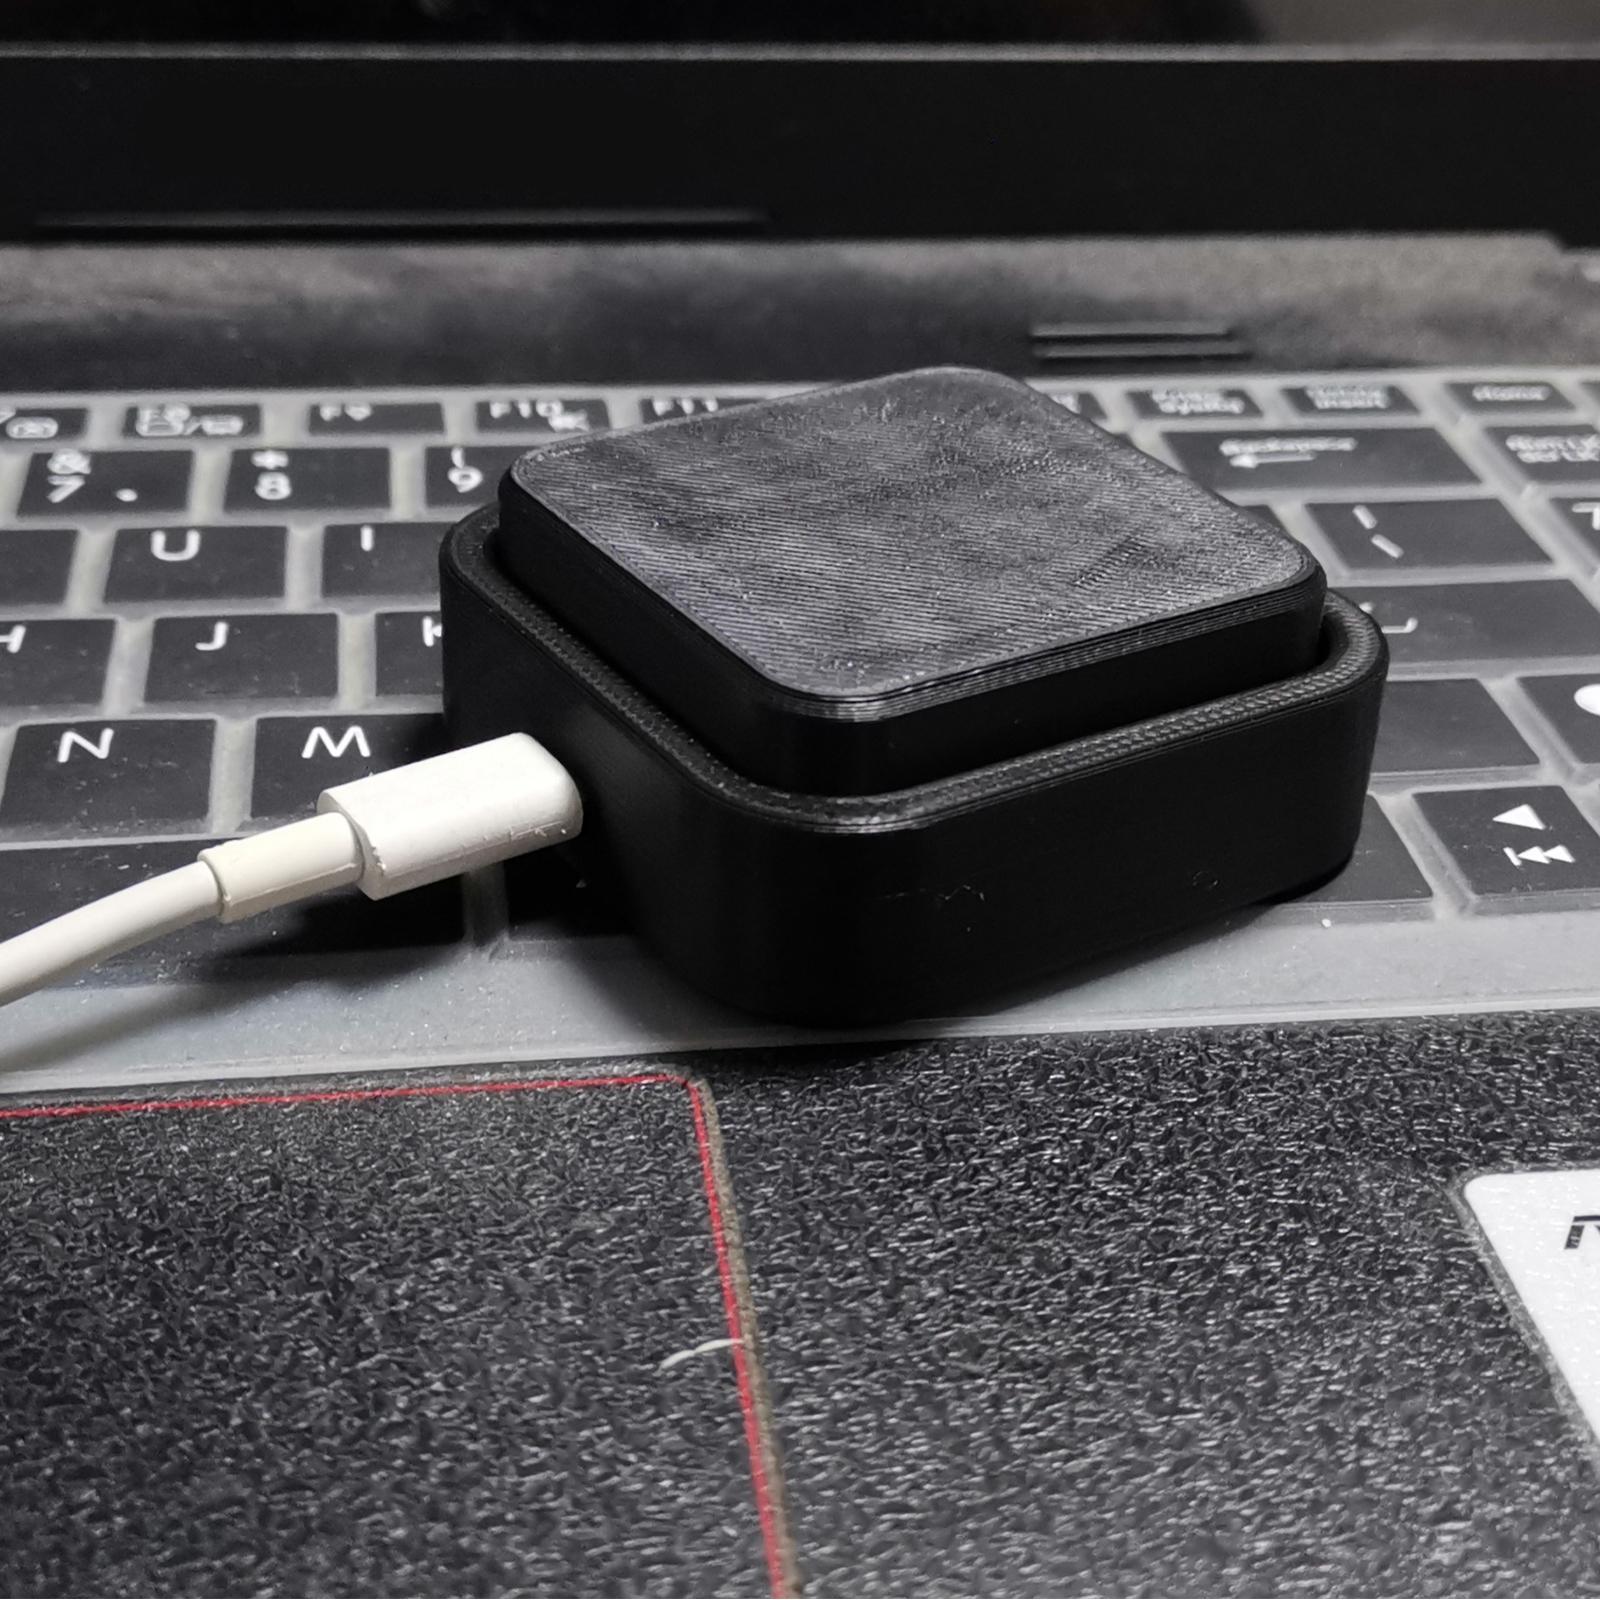 1/2/3 Large Key USB Programmable Macro Keyboard For Windows Linux MacOS Hot Key Mouse One Key Button USB Mini Keyboard